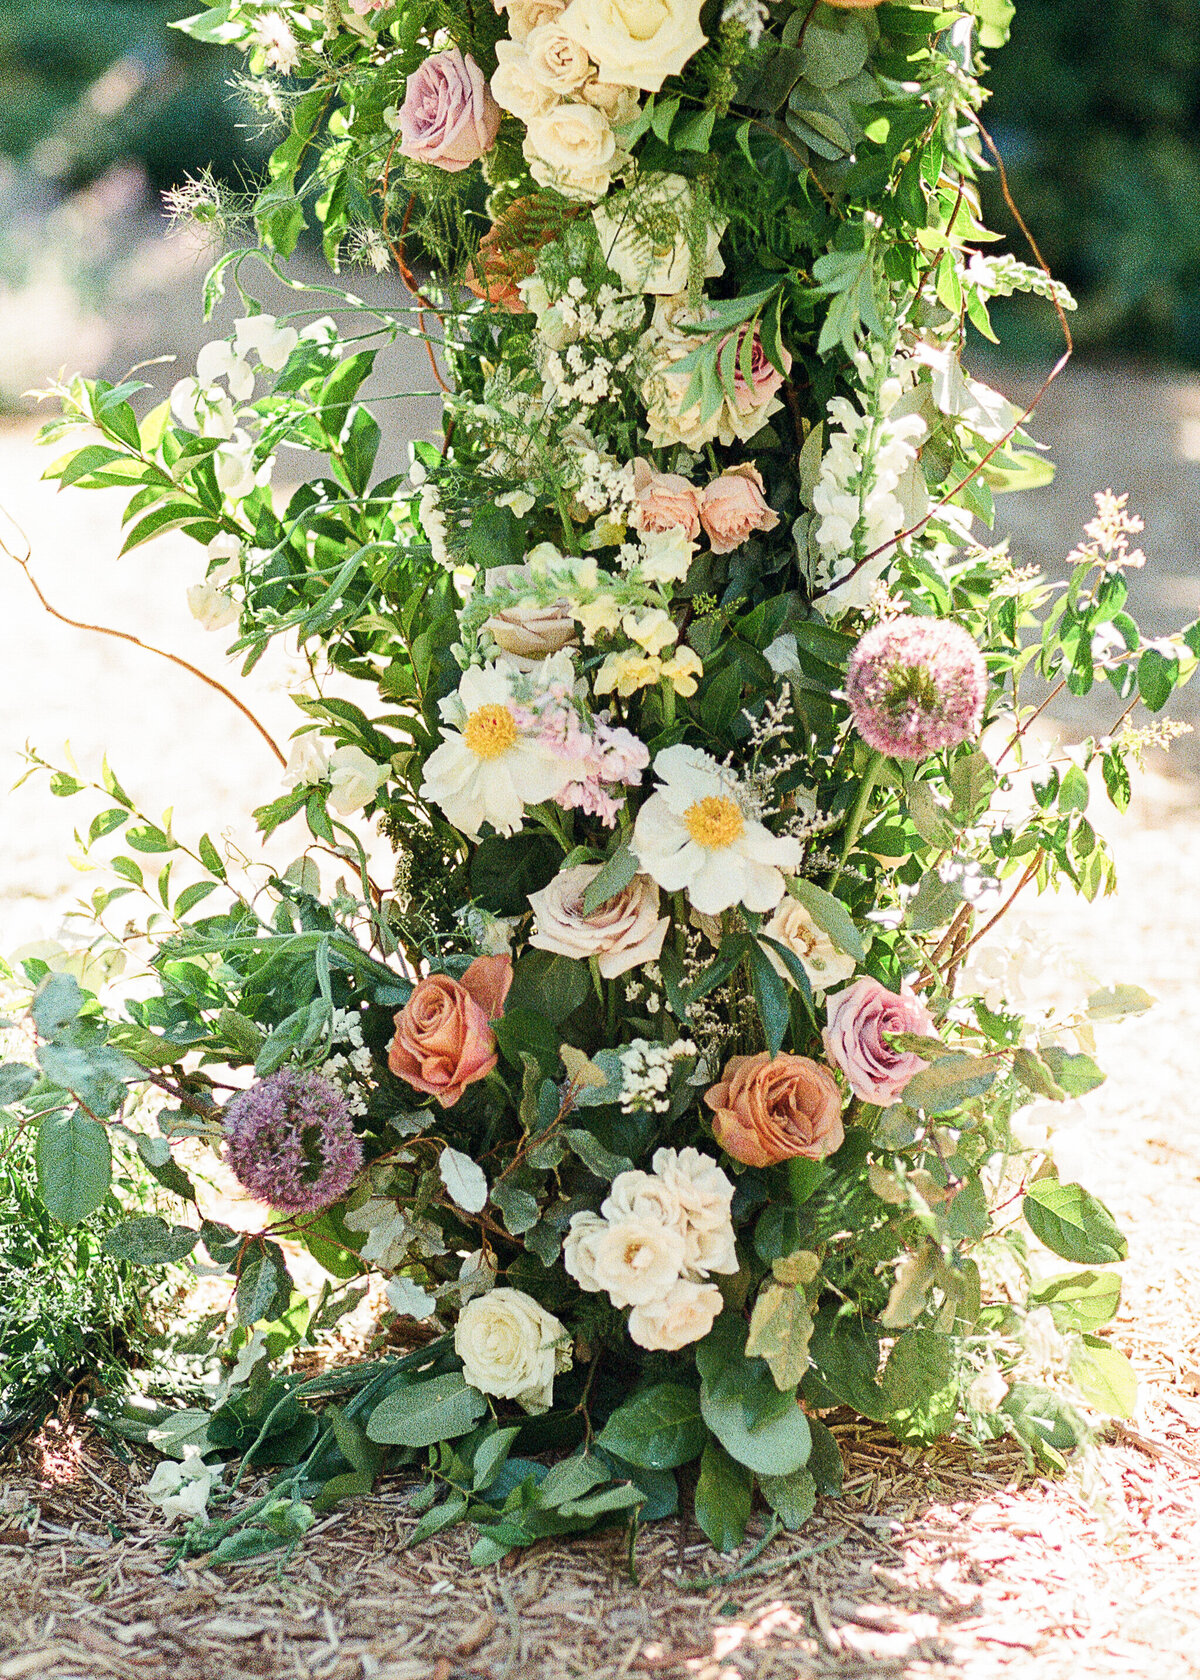 Sarah Rae Floral Designs Wedding Event Florist Flowers Kentucky Chic Whimsical Romantic Weddings6